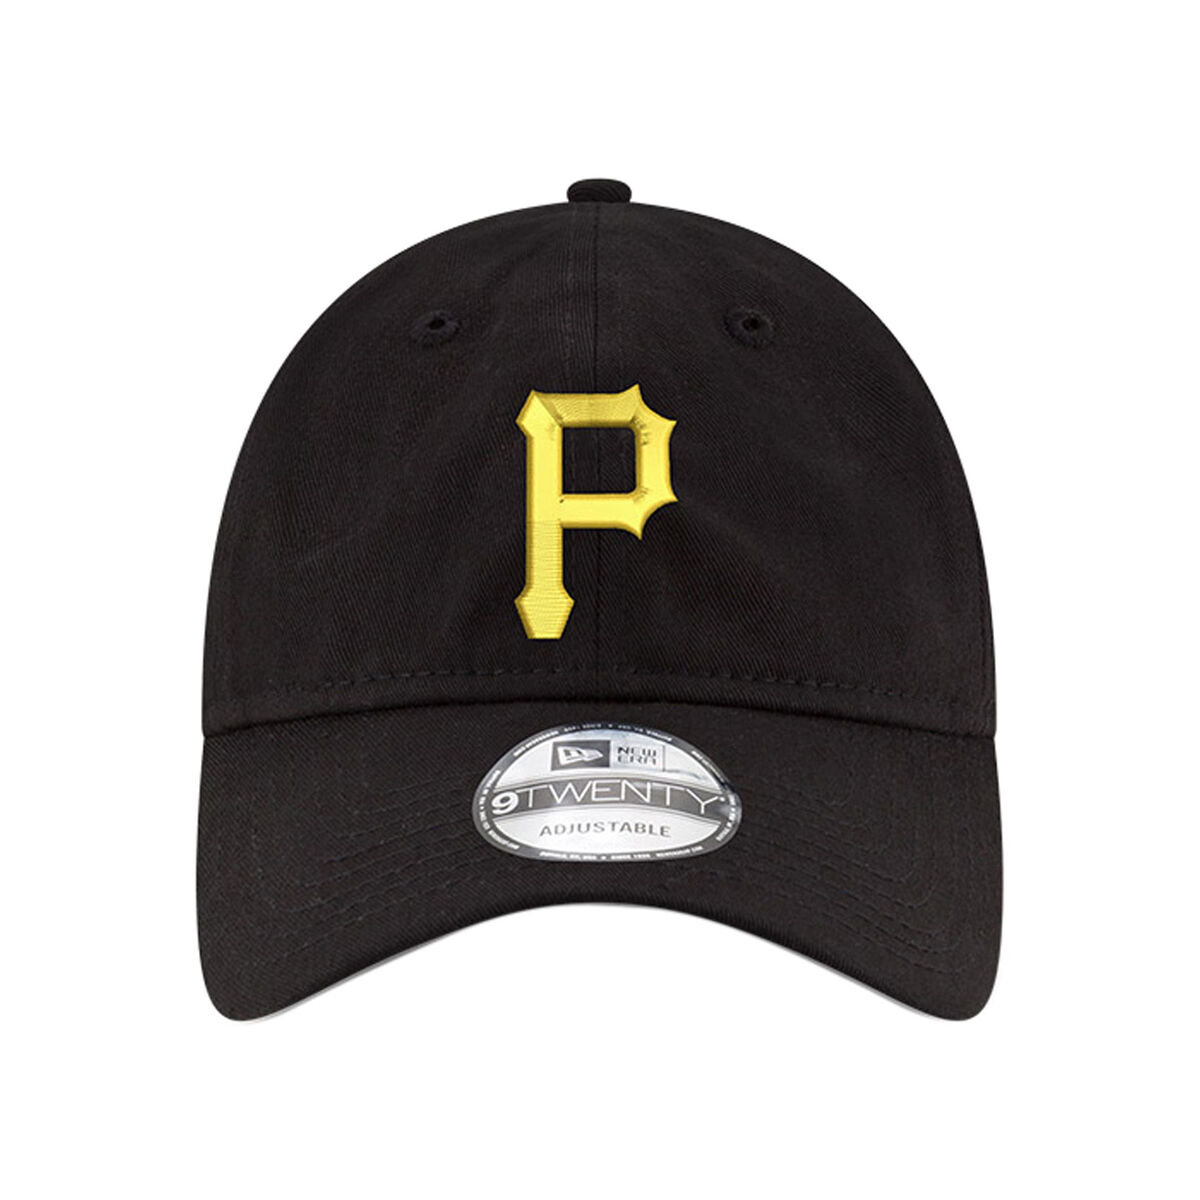 Genuine Merchandise, Shirts, Genuine Merchandise Pittsburgh Pirates  Baseball Black Tee Nwt Size Xl